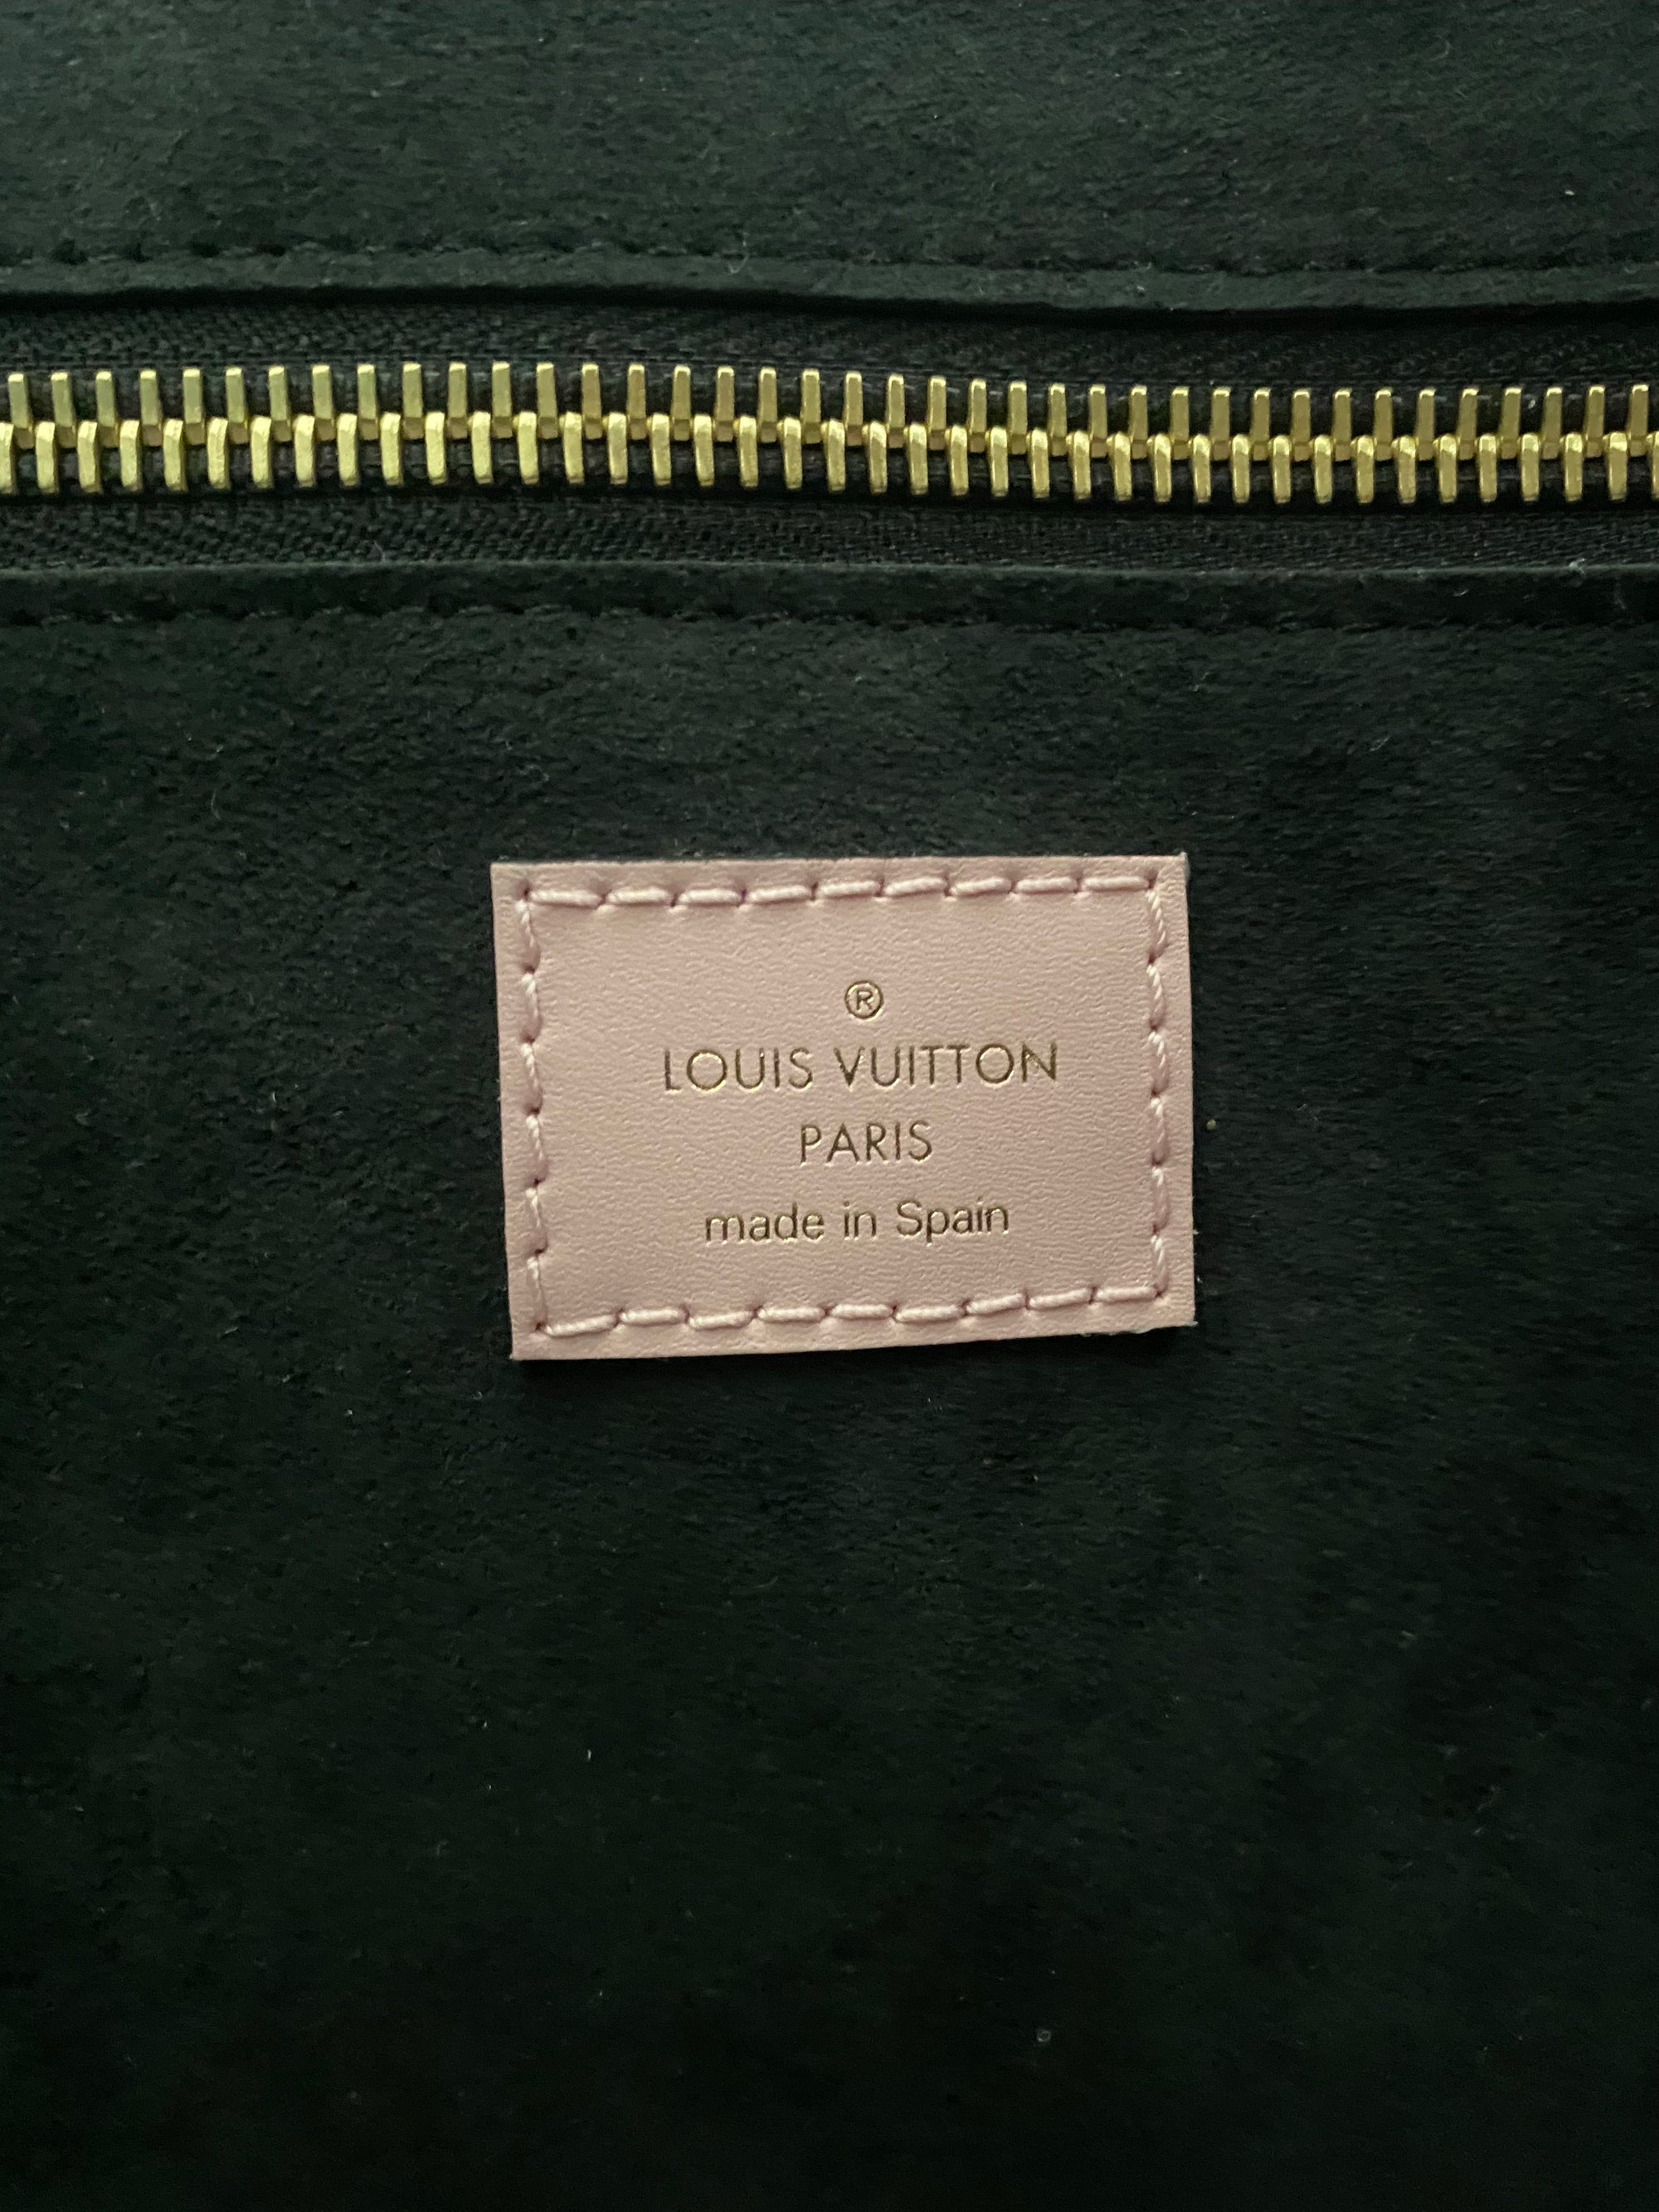 M46040 Louis Vuitton Monogram Empreinte Neverfull MM Tote Bag